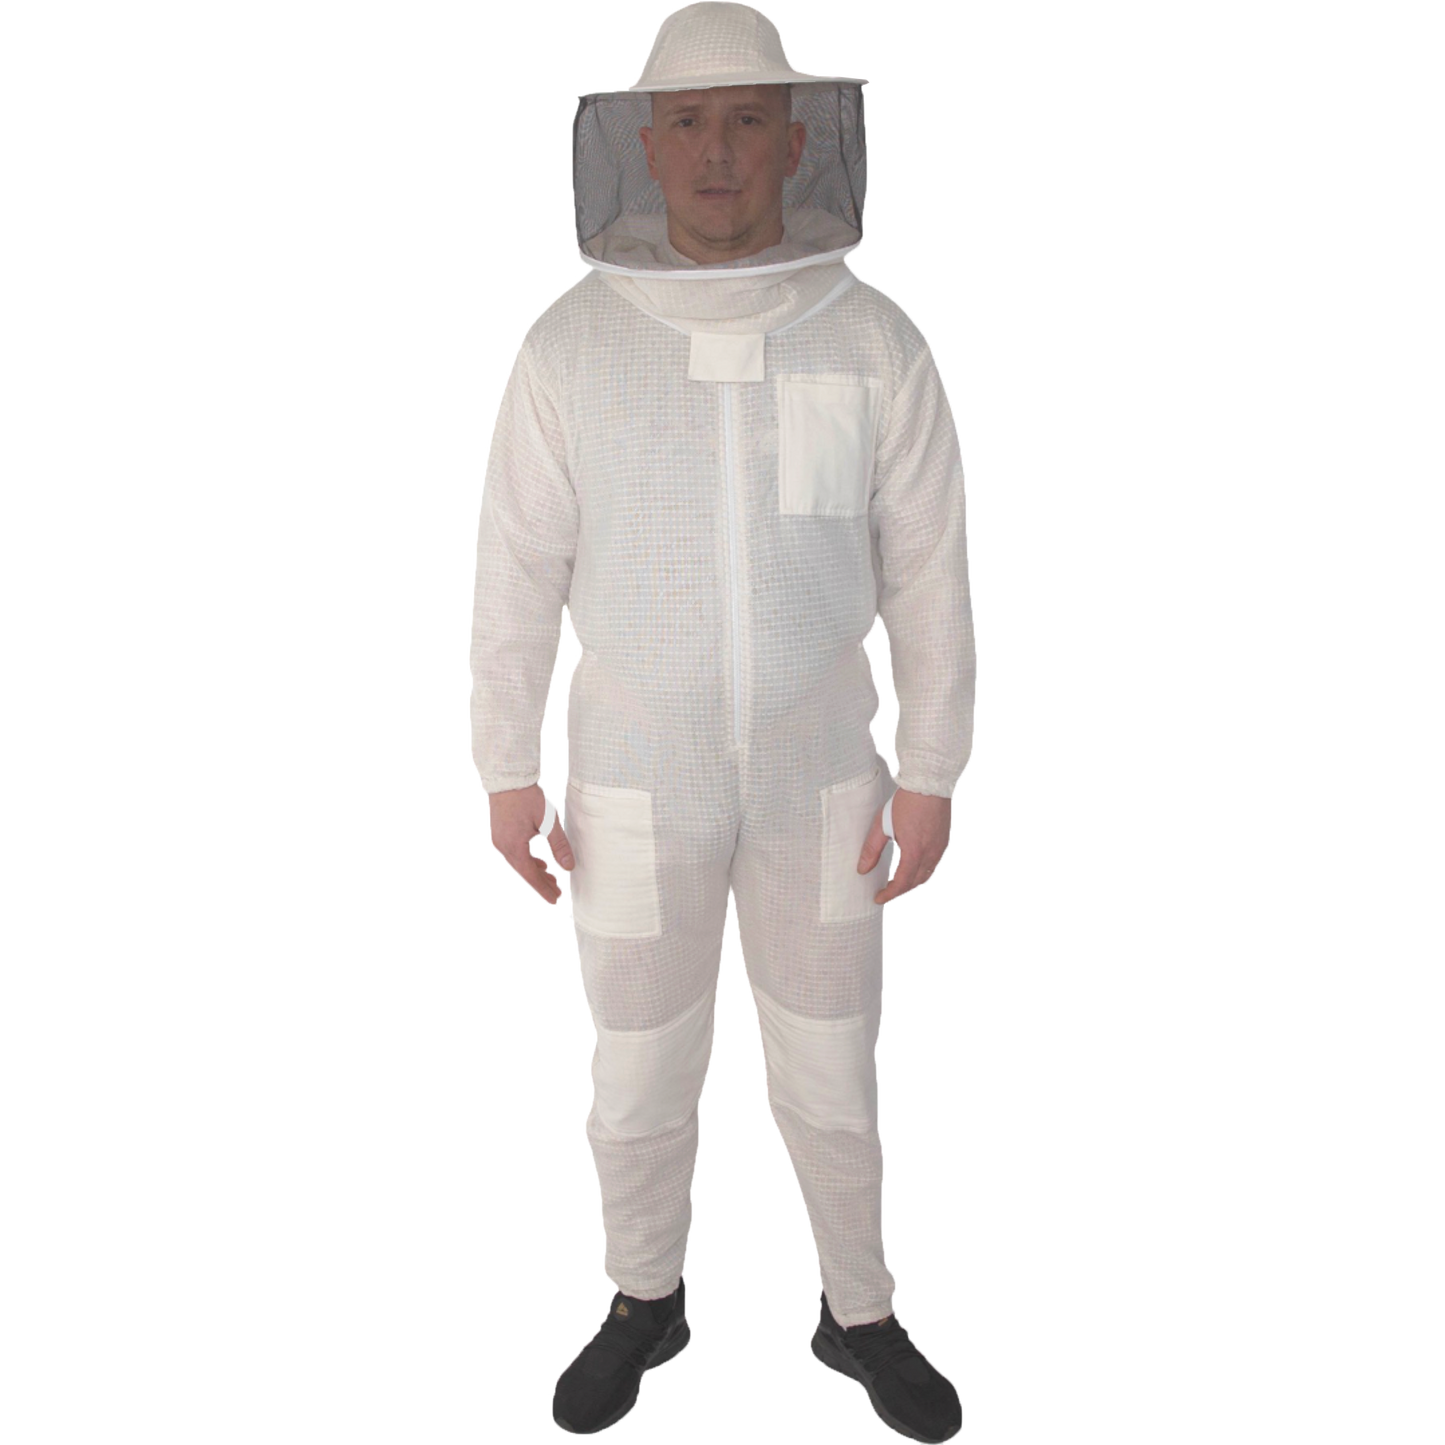 BEEATTIRE Ventilated Bee Suit 3 Layer Mesh Bee Full Beekeeping Costume YKK Zippers with Round Hood